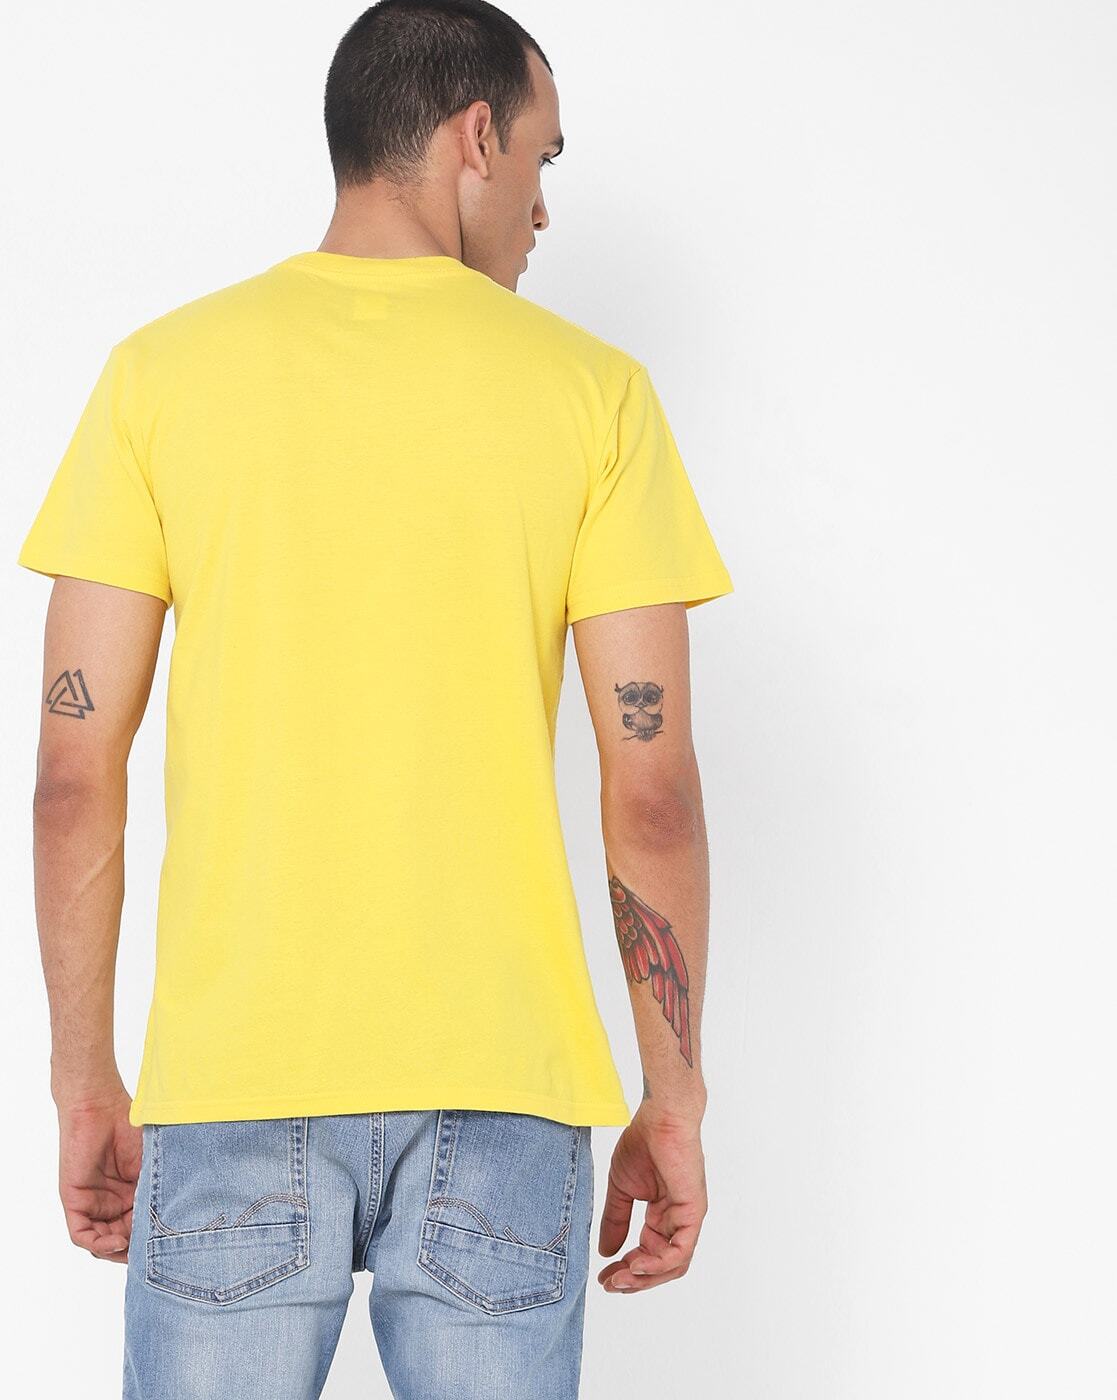 Star Typographic Brand Print Slim Fit T-shirt-Edyzt03900-star ss2